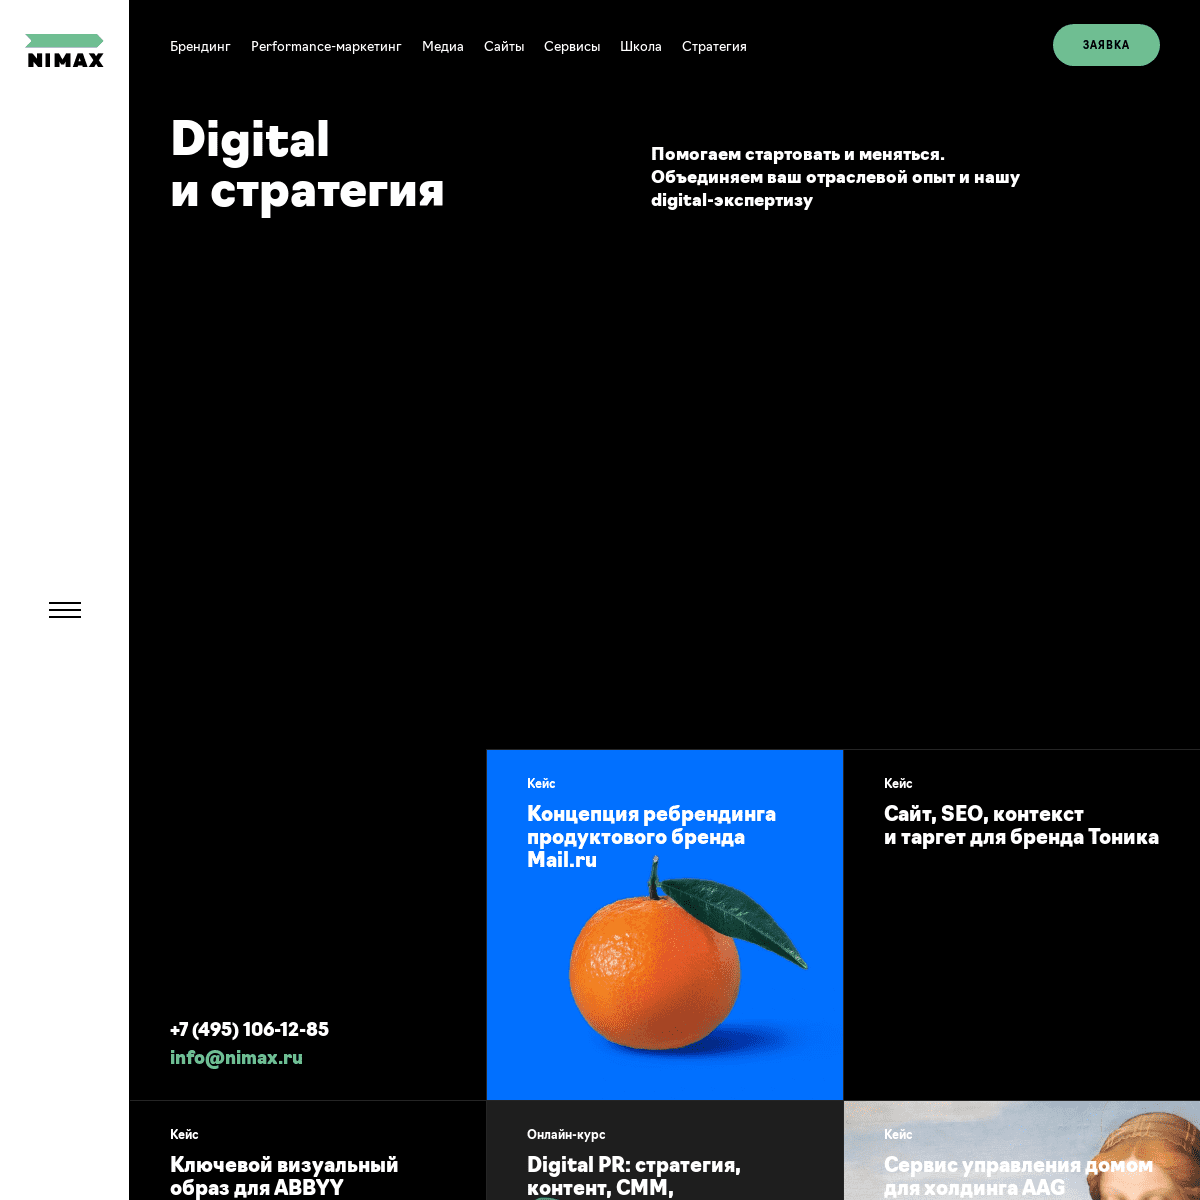 A complete backup of nimax.ru